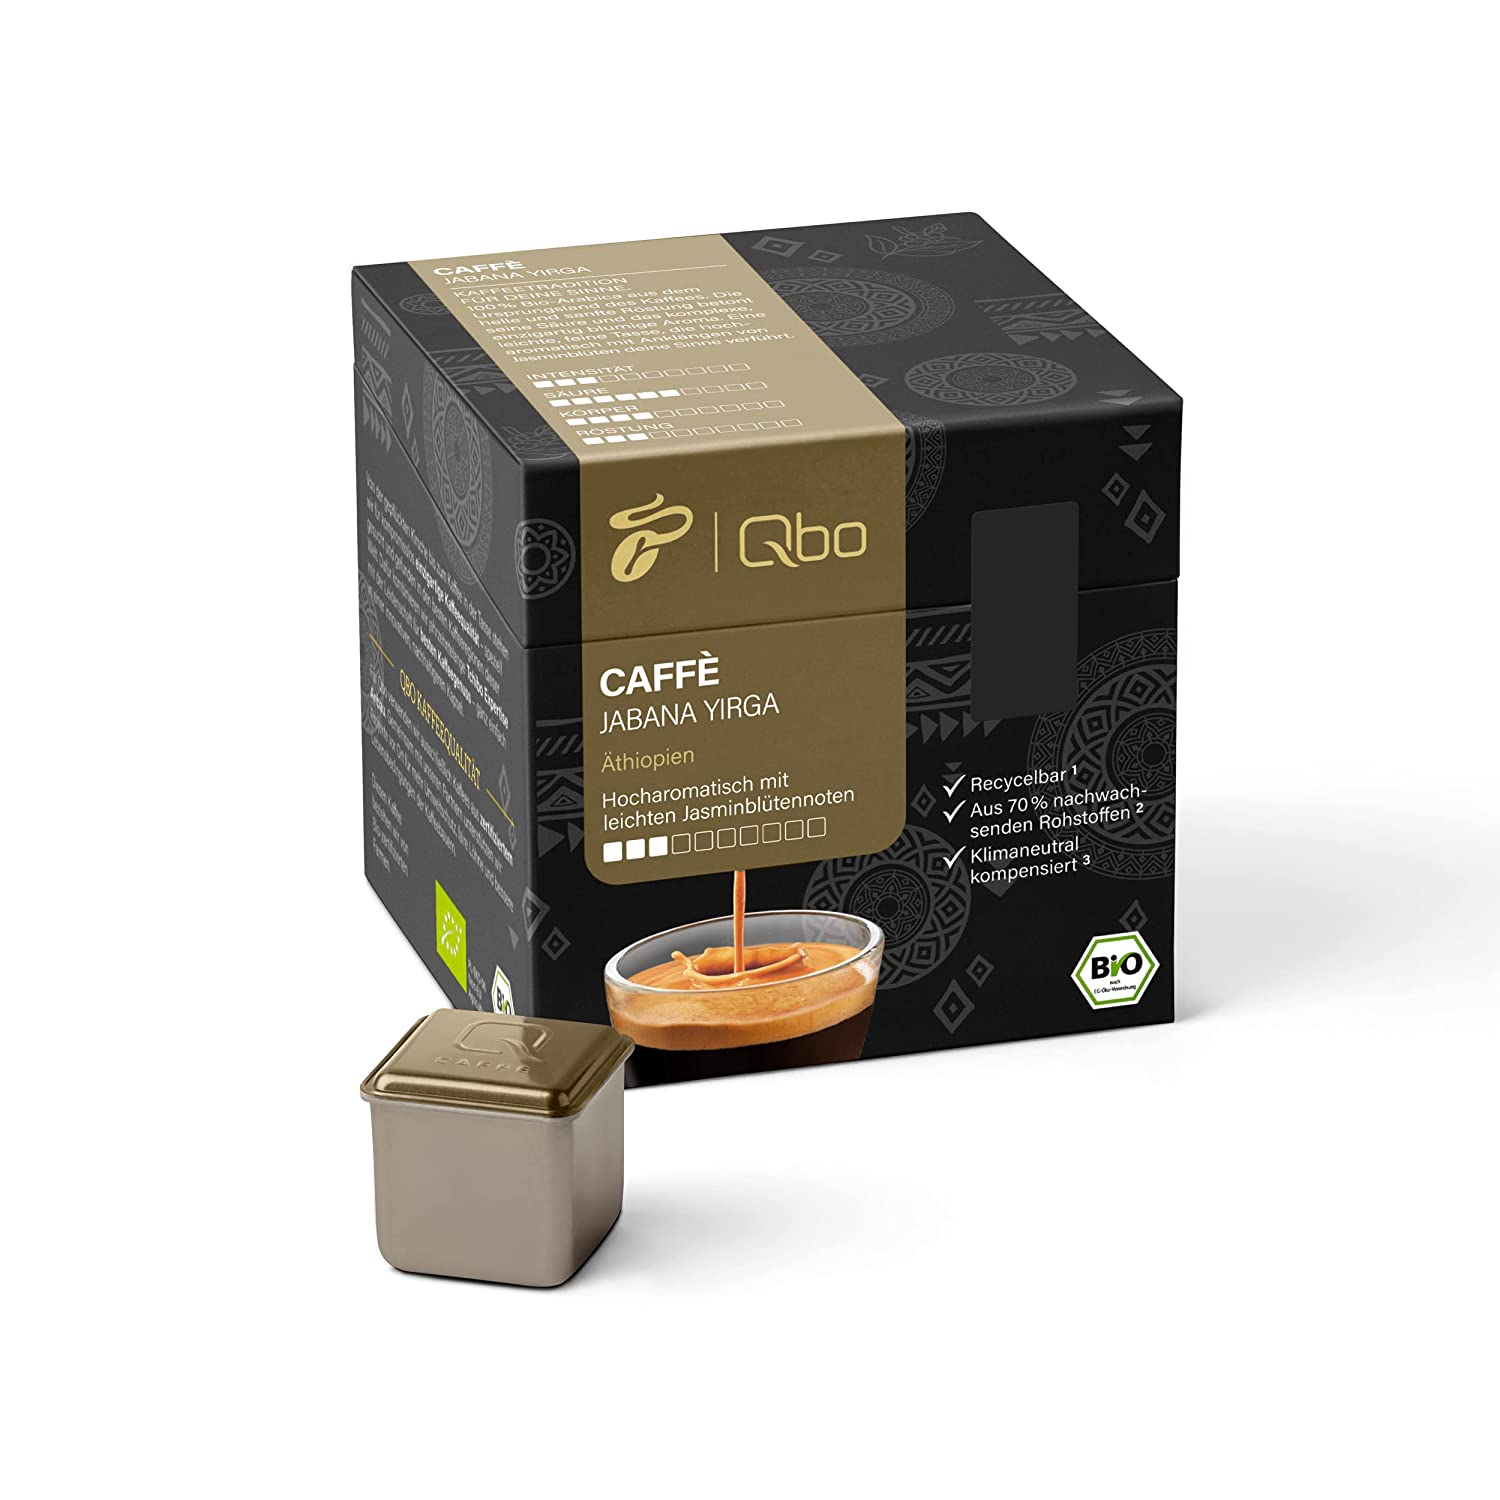 Tchibo qbo Caffè Jabana Yirga Premium coffee capsules, 216 pieces - 8x27 capsules (caffè, intensity 03/10, highly aromatic, jasmine flower grades), sustainable, made of 70% renewable raw materials